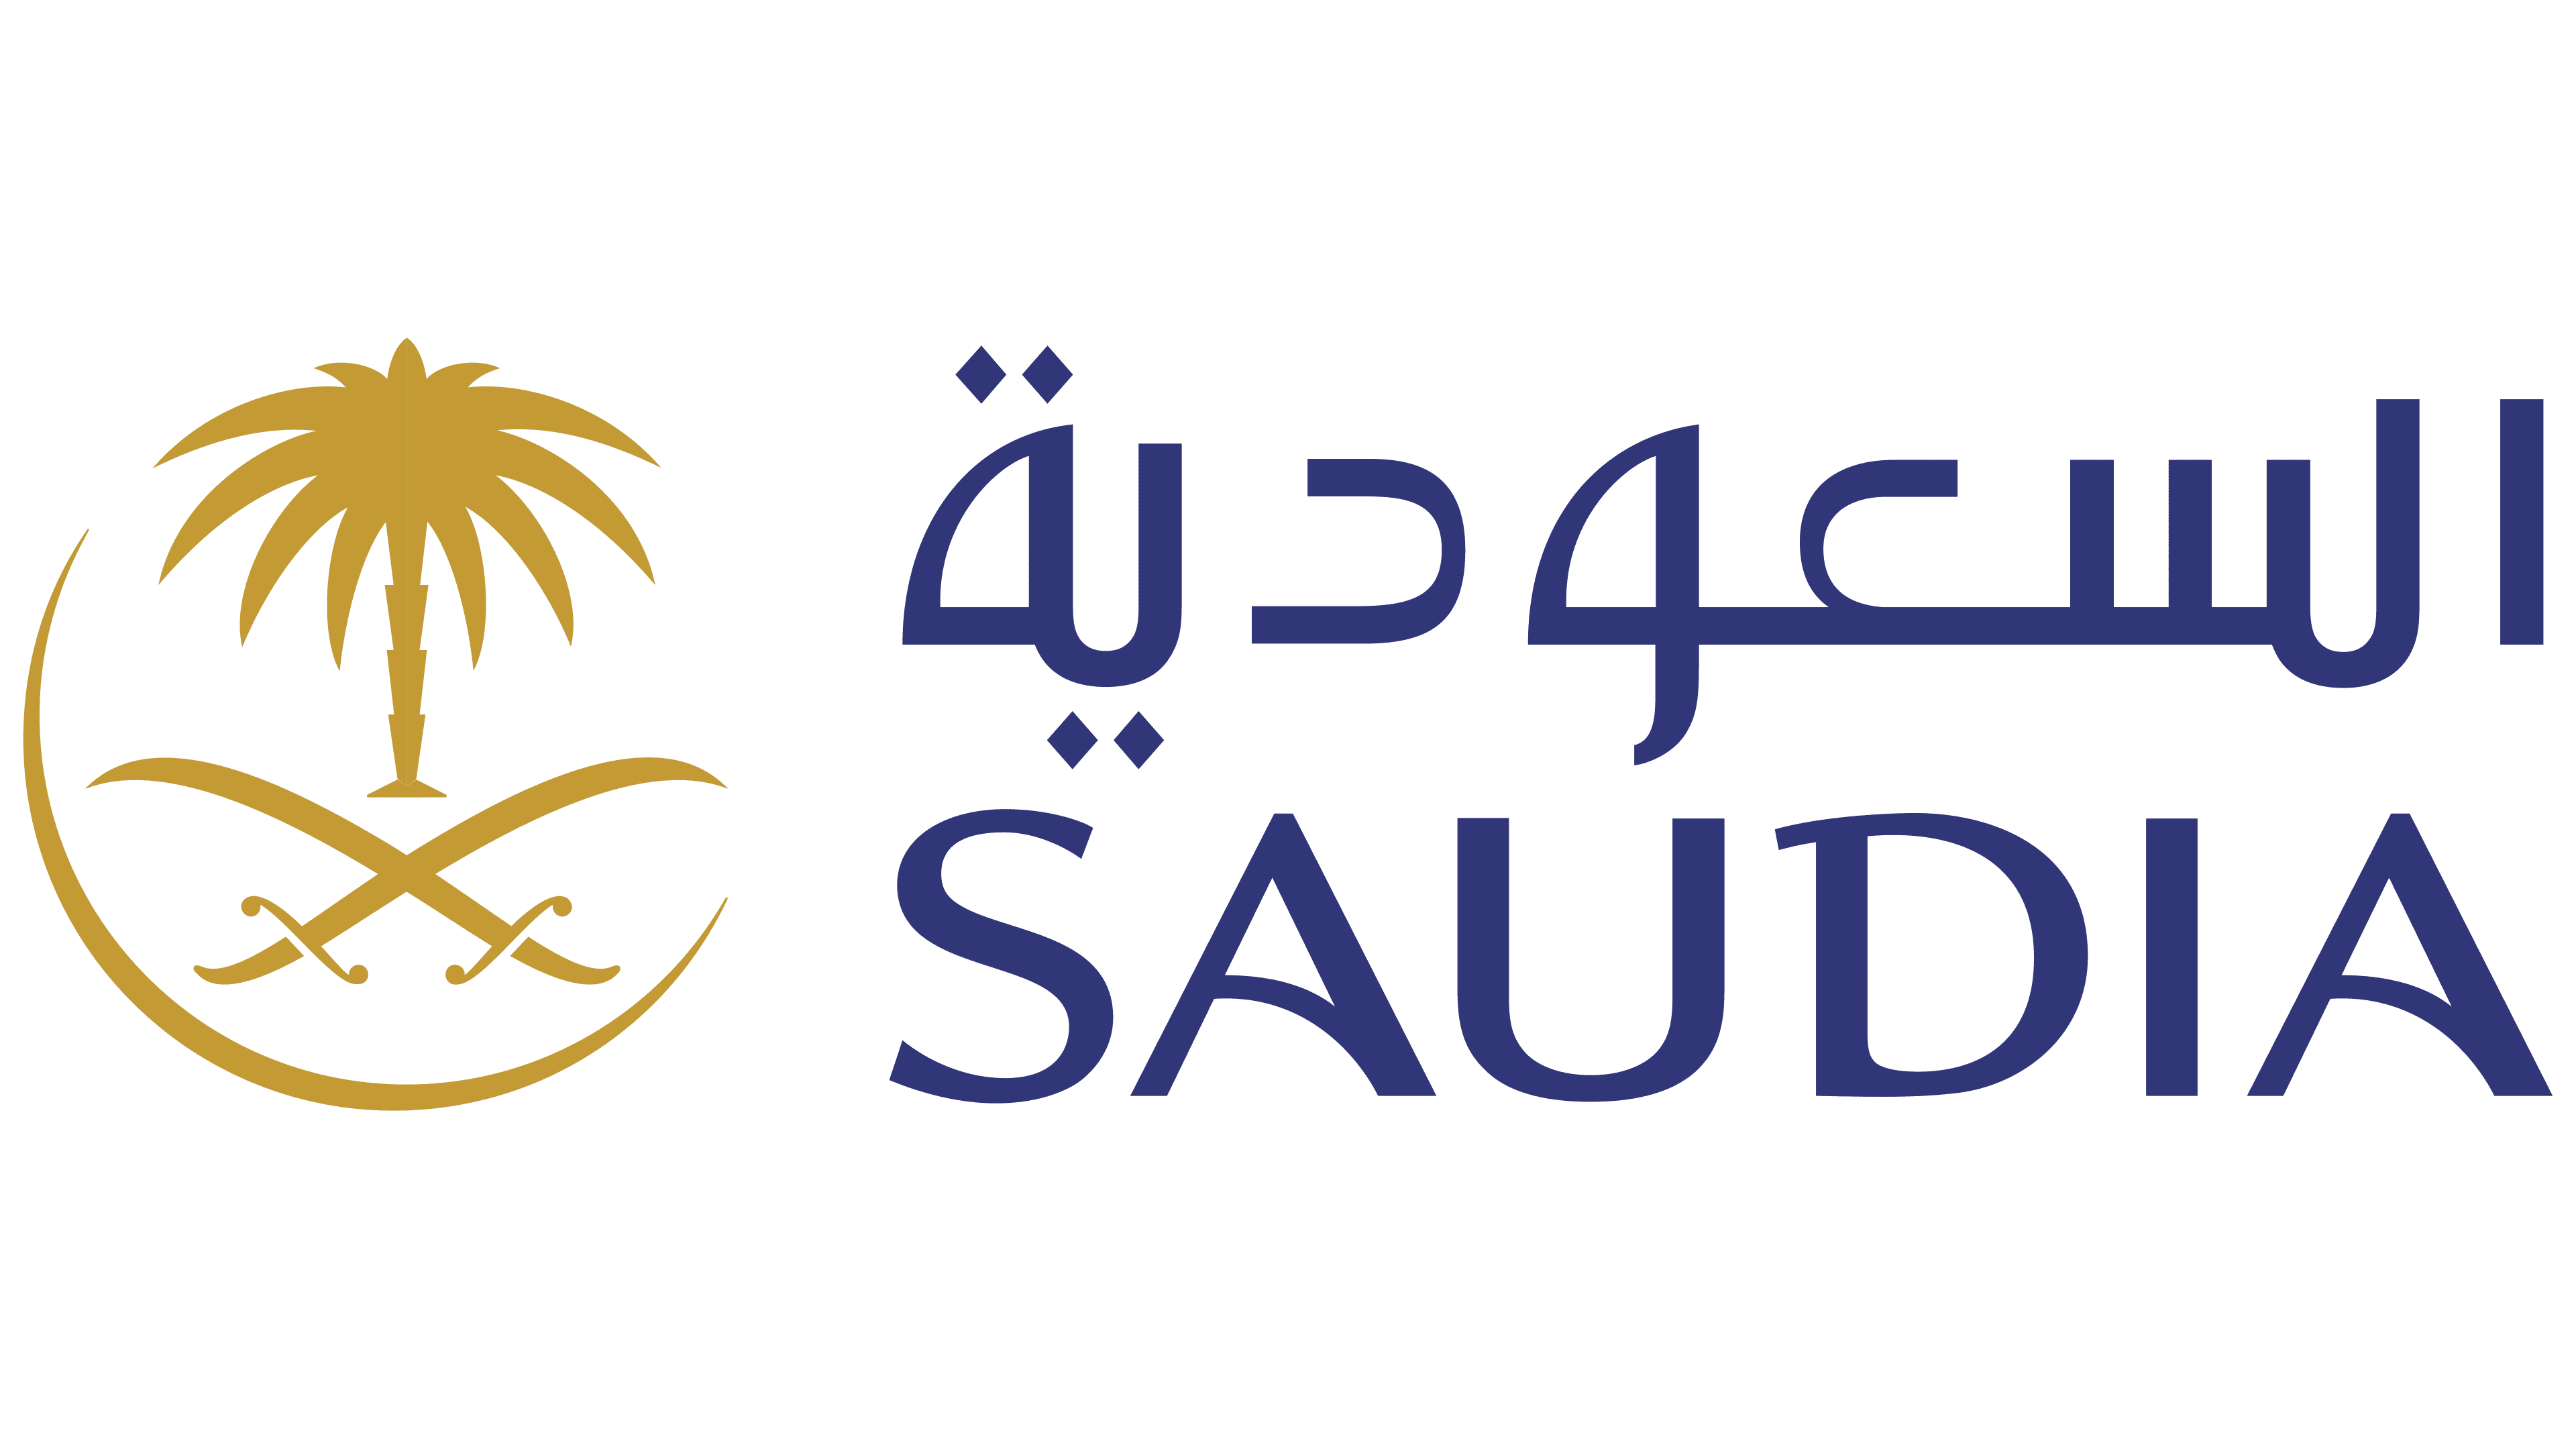 Sales Executive at Saudia Airlines